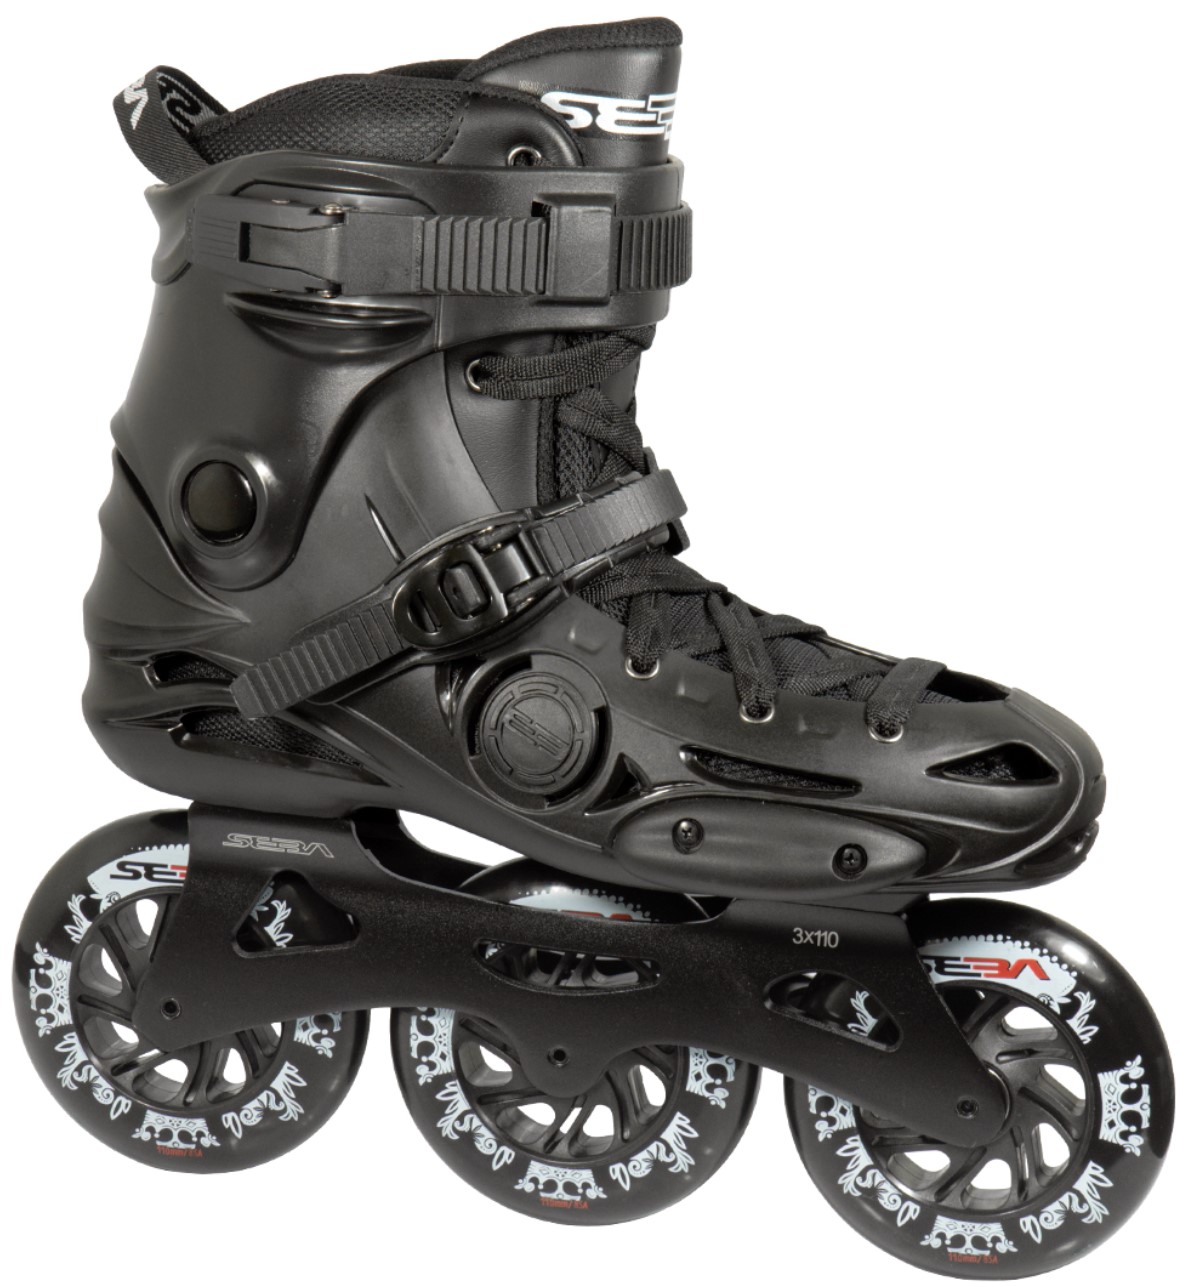 Seba E3 Premium 310 Black freeride inline skate with three black Seba Street Kings 110 mm wheels and ABEC 9 bearings